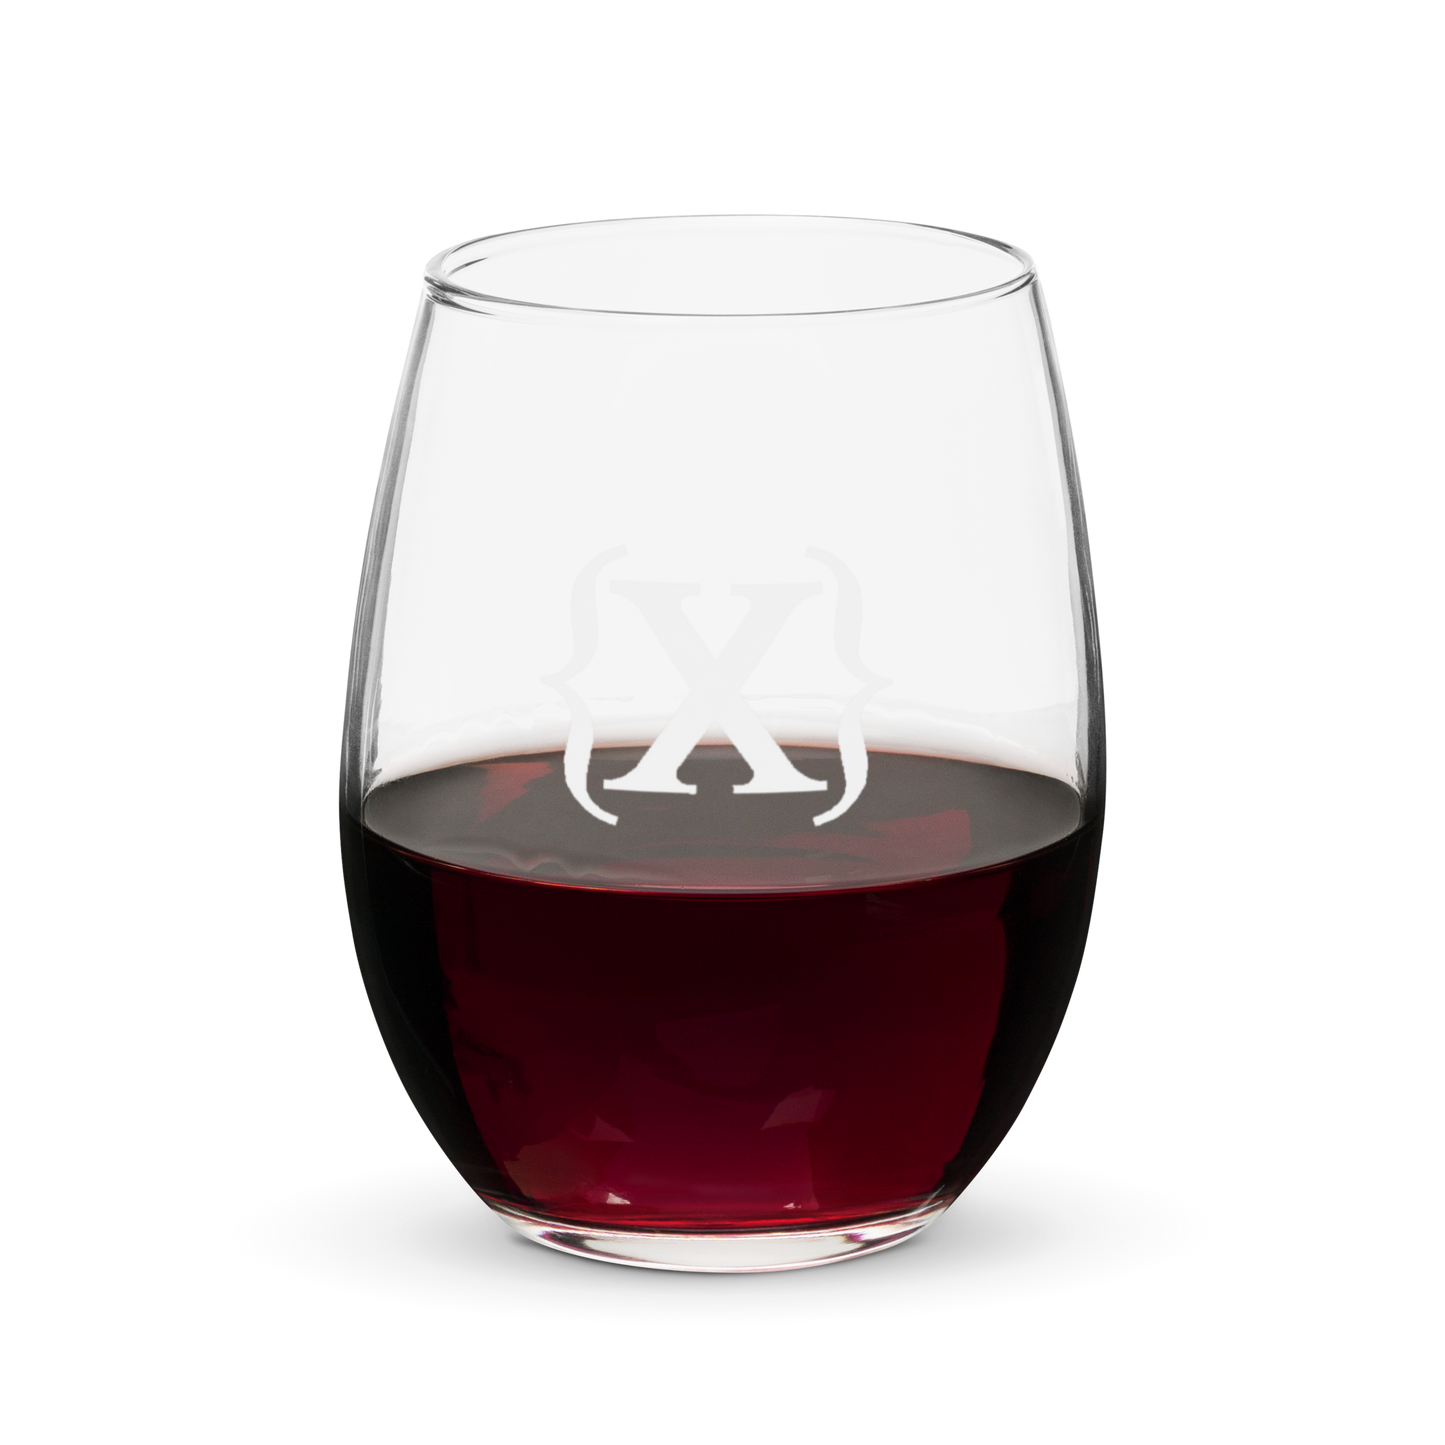 Bundle Deal! - Kiss + Swallow Wine Glass & Coaster Set